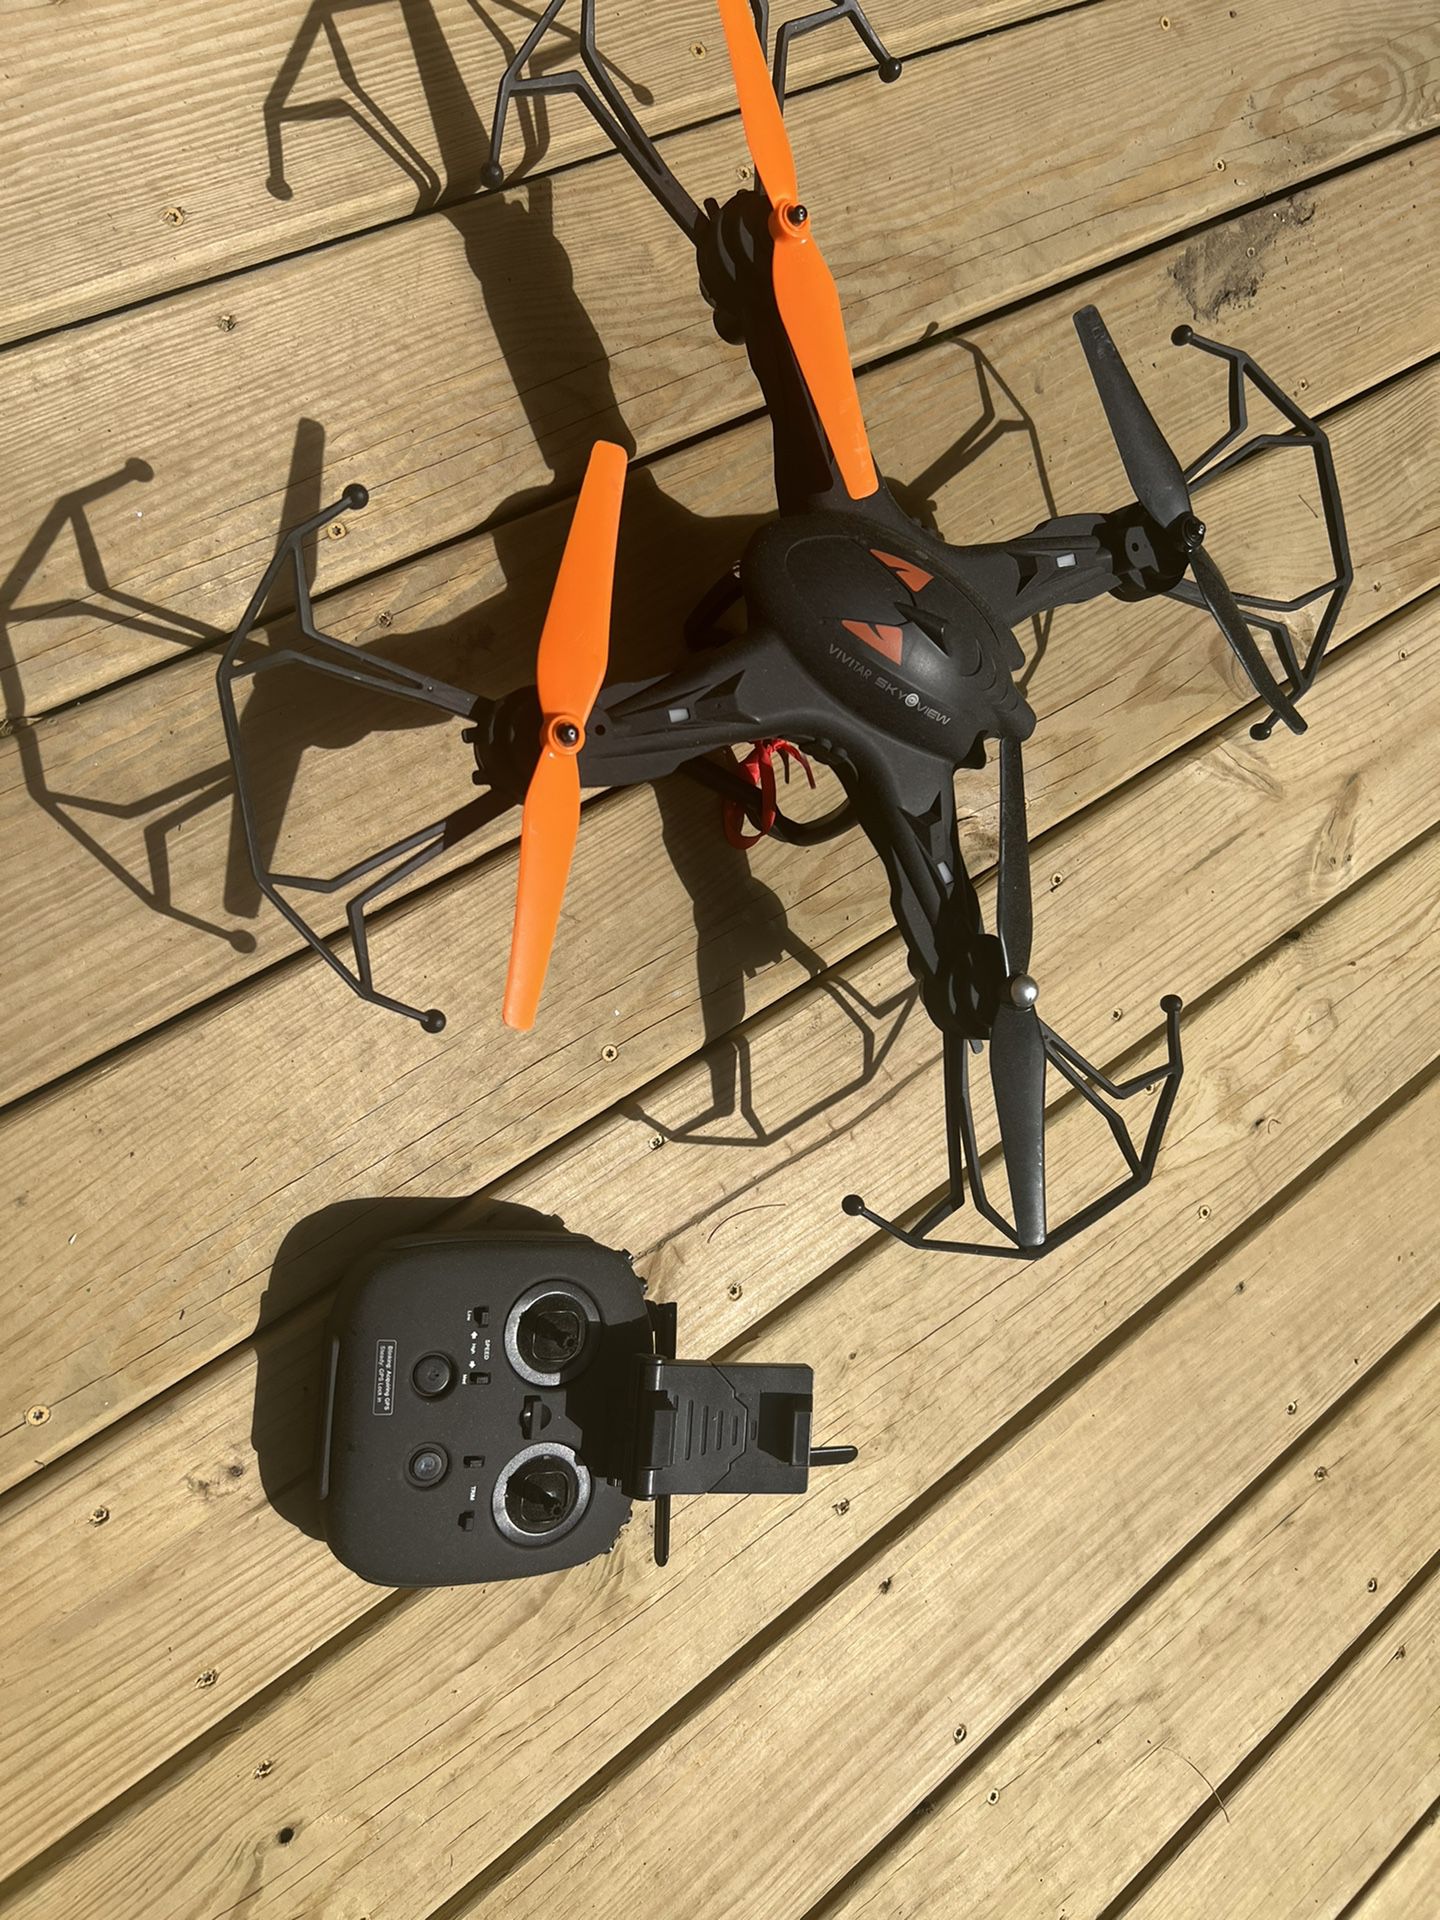 VIVITAR Skyview Drone